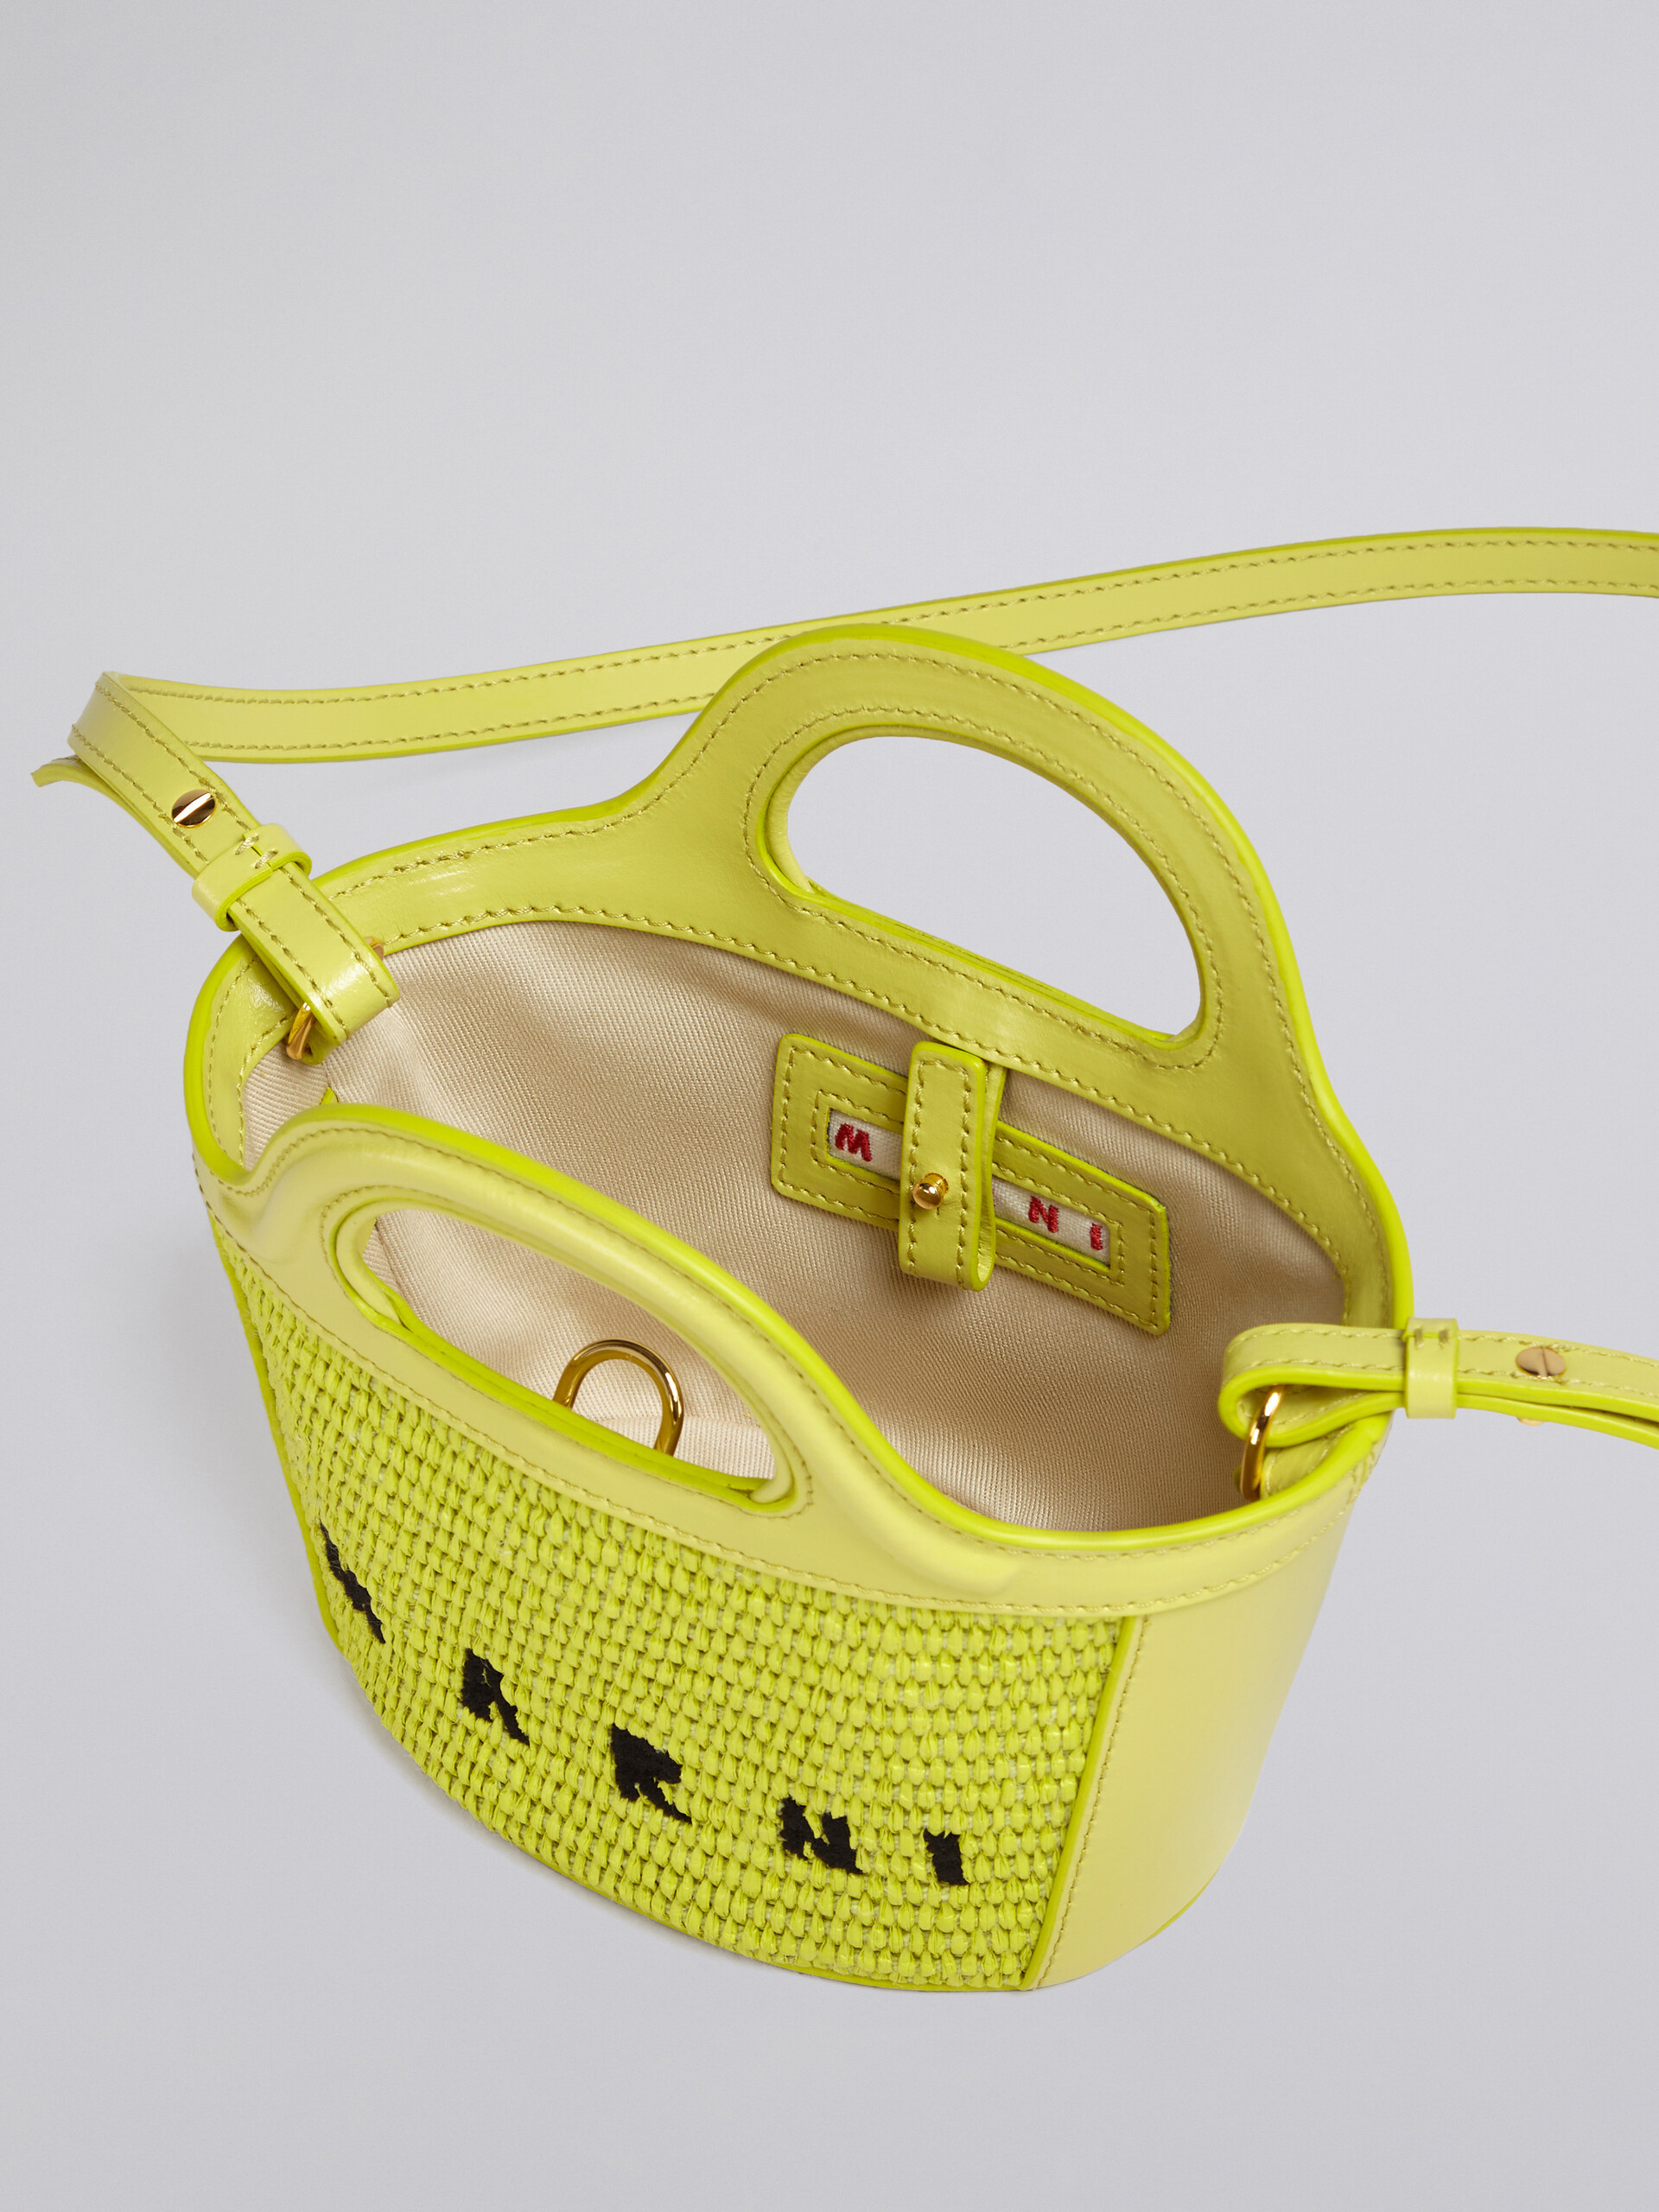 TROPICALIA micro bag in yellow leather and raffia - Handbag - Image 4